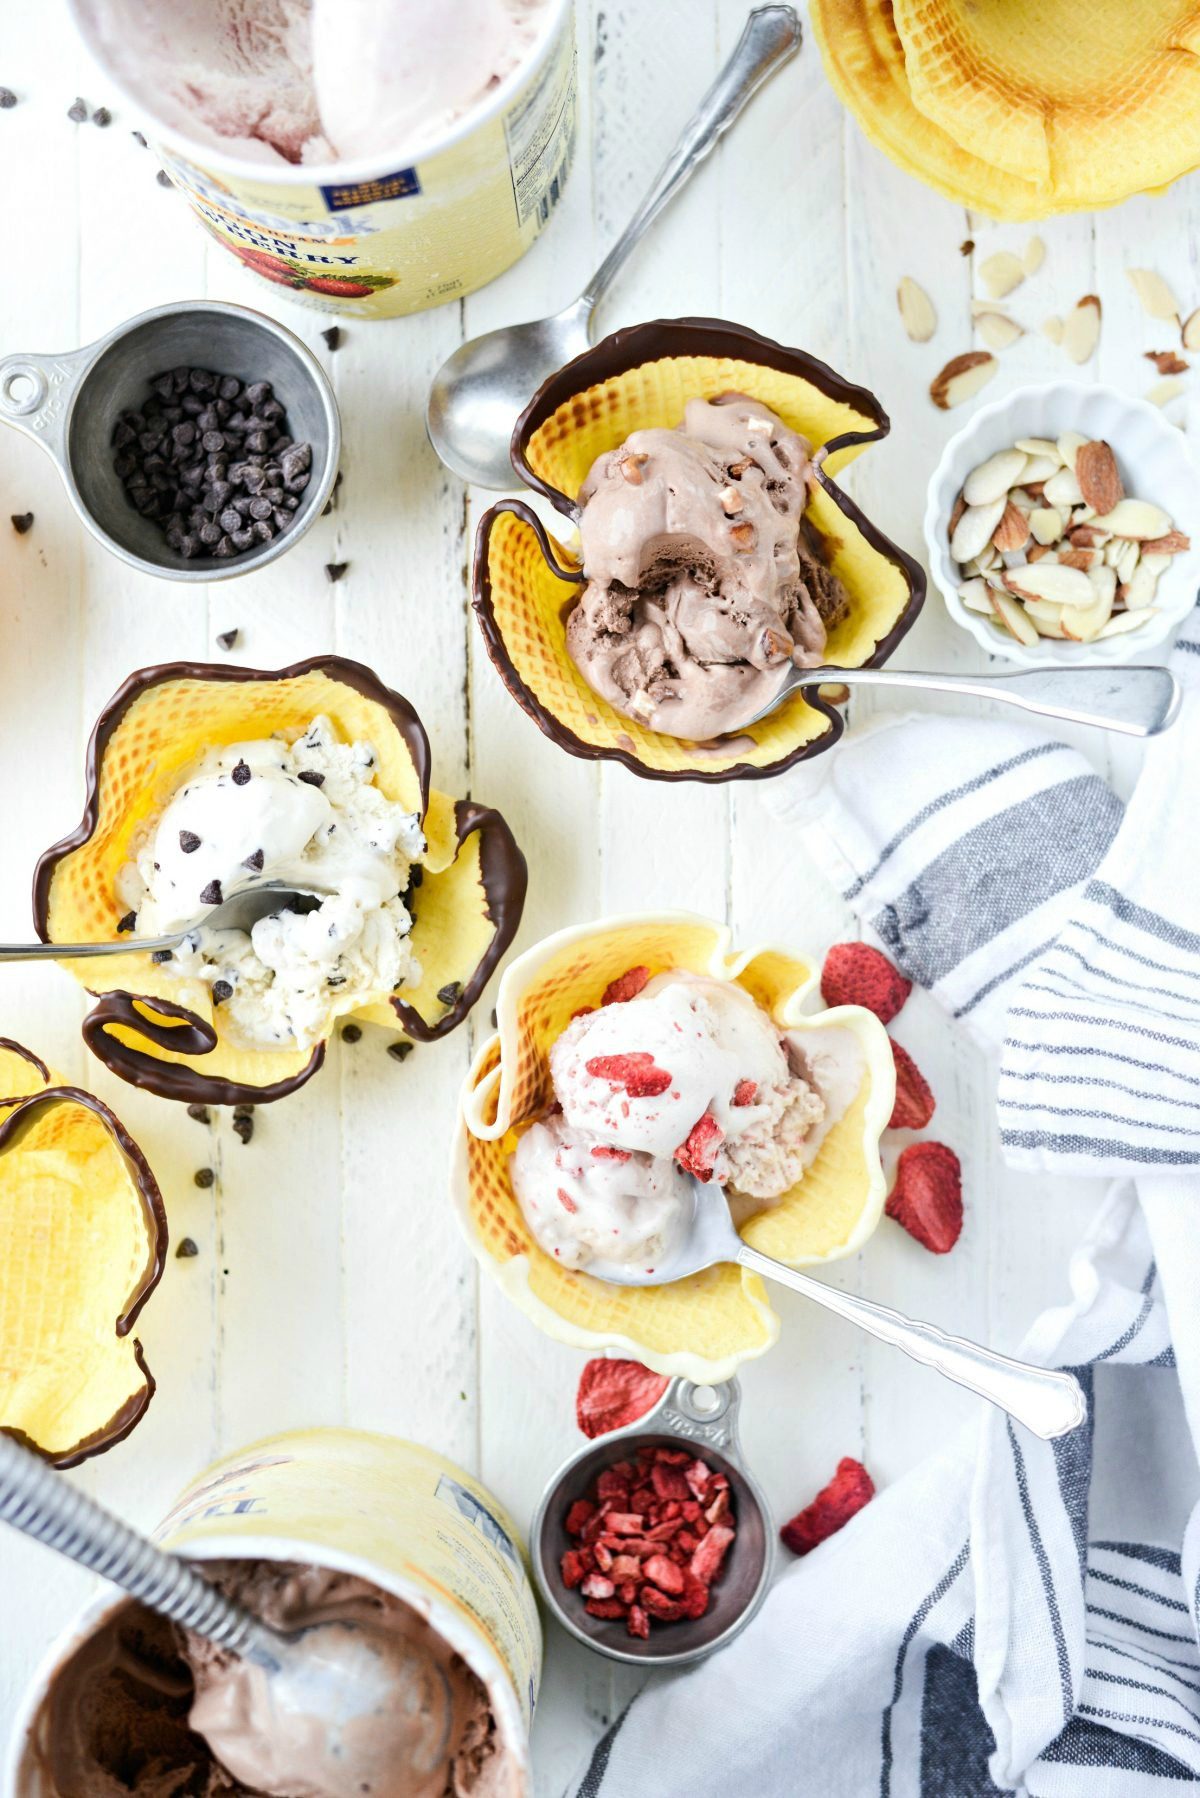 https://www.simplyscratch.com/wp-content/uploads/2018/07/Homemade-Ice-Cream-Waffle-Bowls-l-SimplyScratch.com-00-1200x1798.jpg